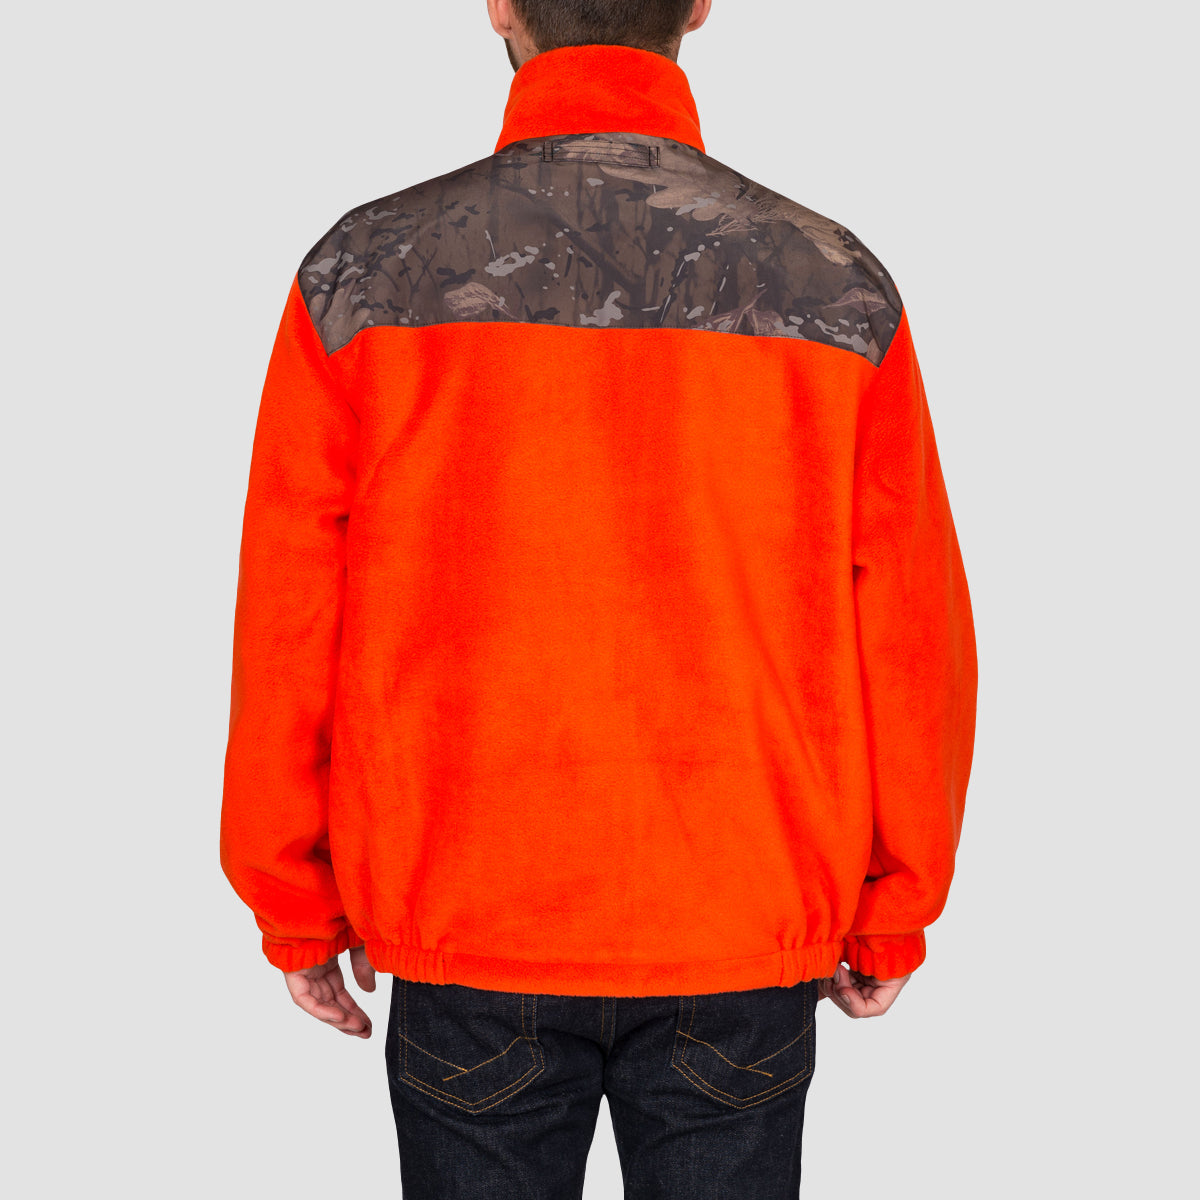 Carhartt WIP Denby Reversible Jacket Camo Combi/Safety Orange